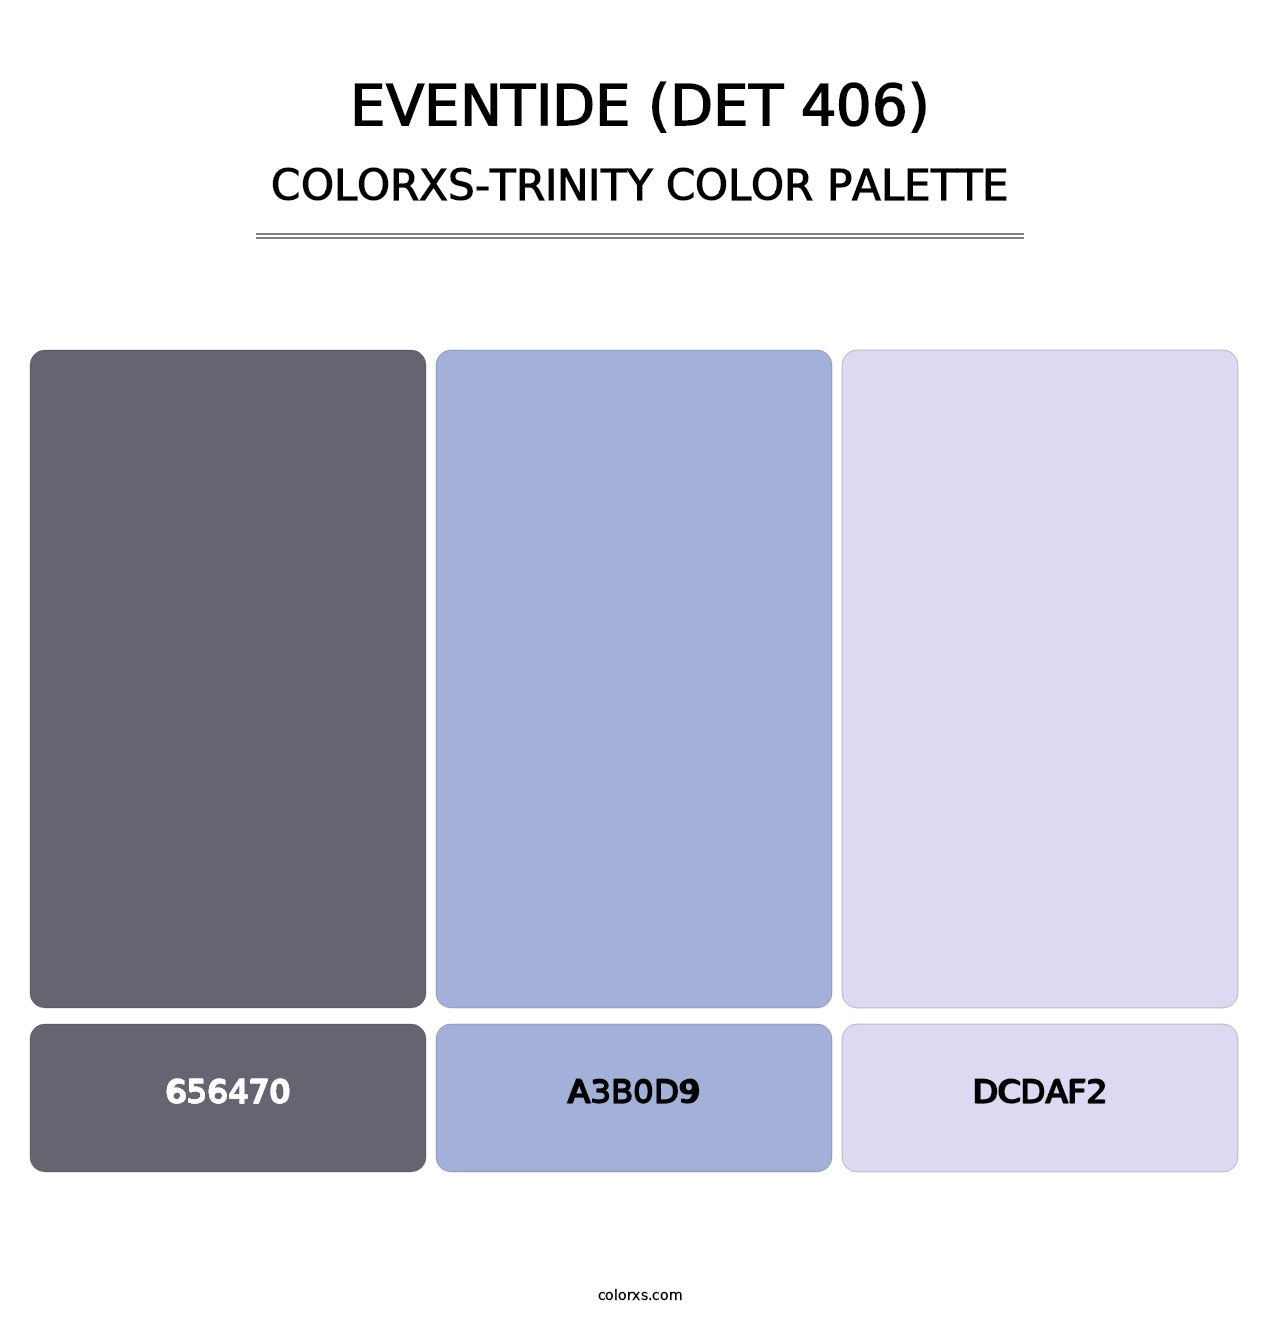 Eventide (DET 406) - Colorxs Trinity Palette